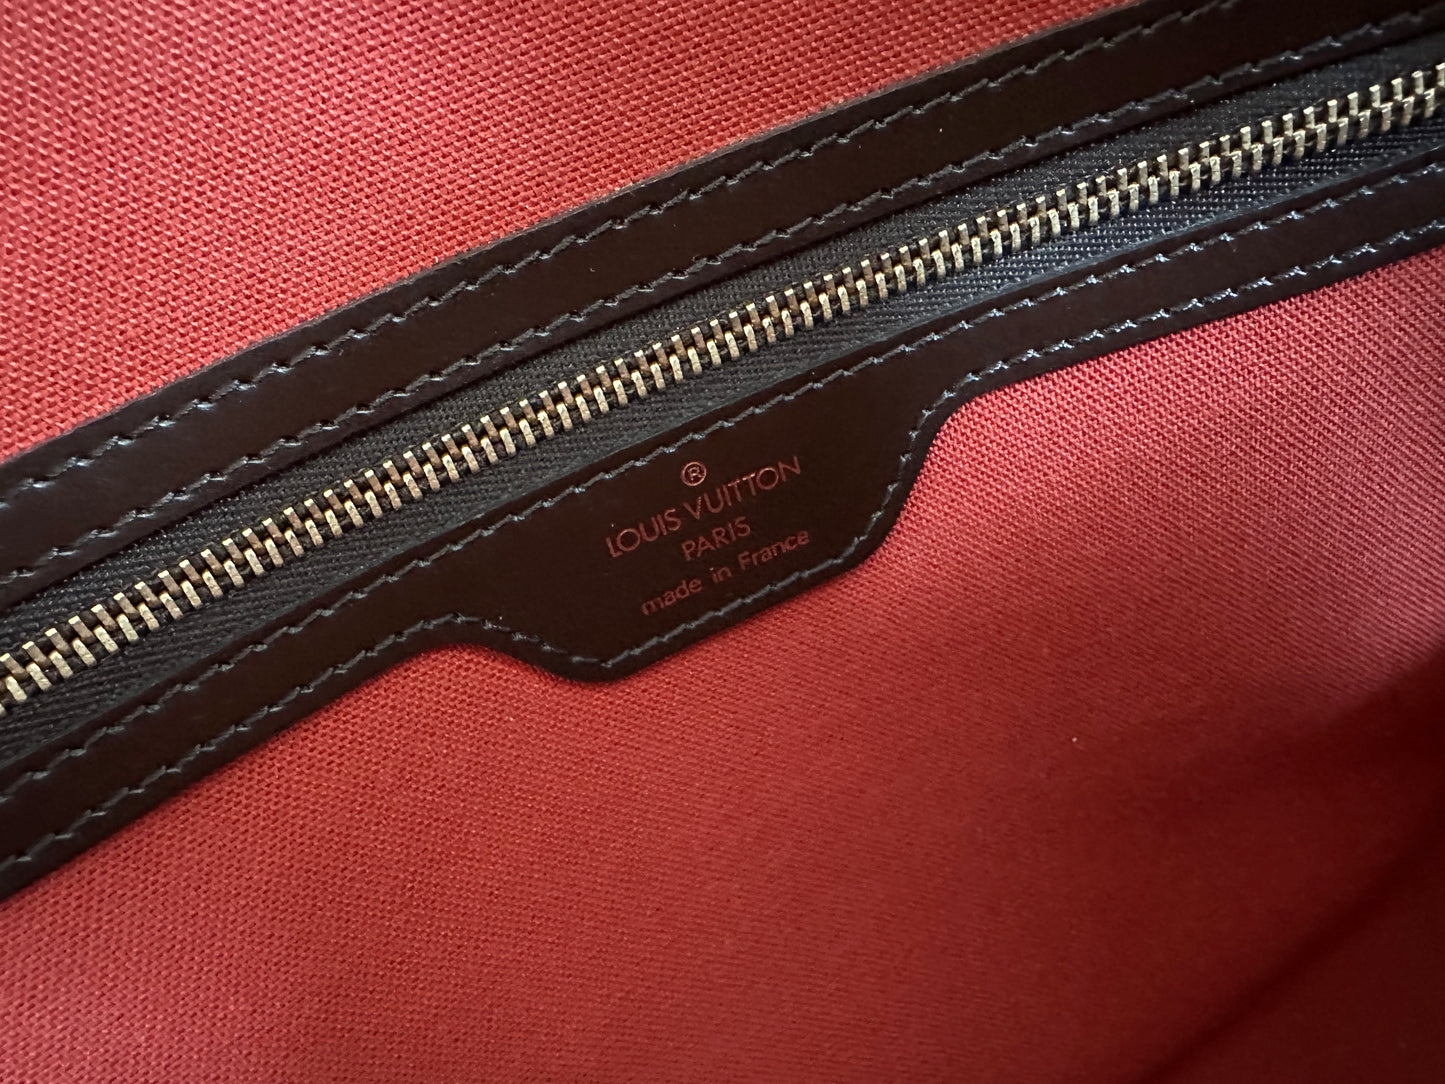 Pre-owned Authentic Louis Vuitton Nolita Damier Ebene Handbag